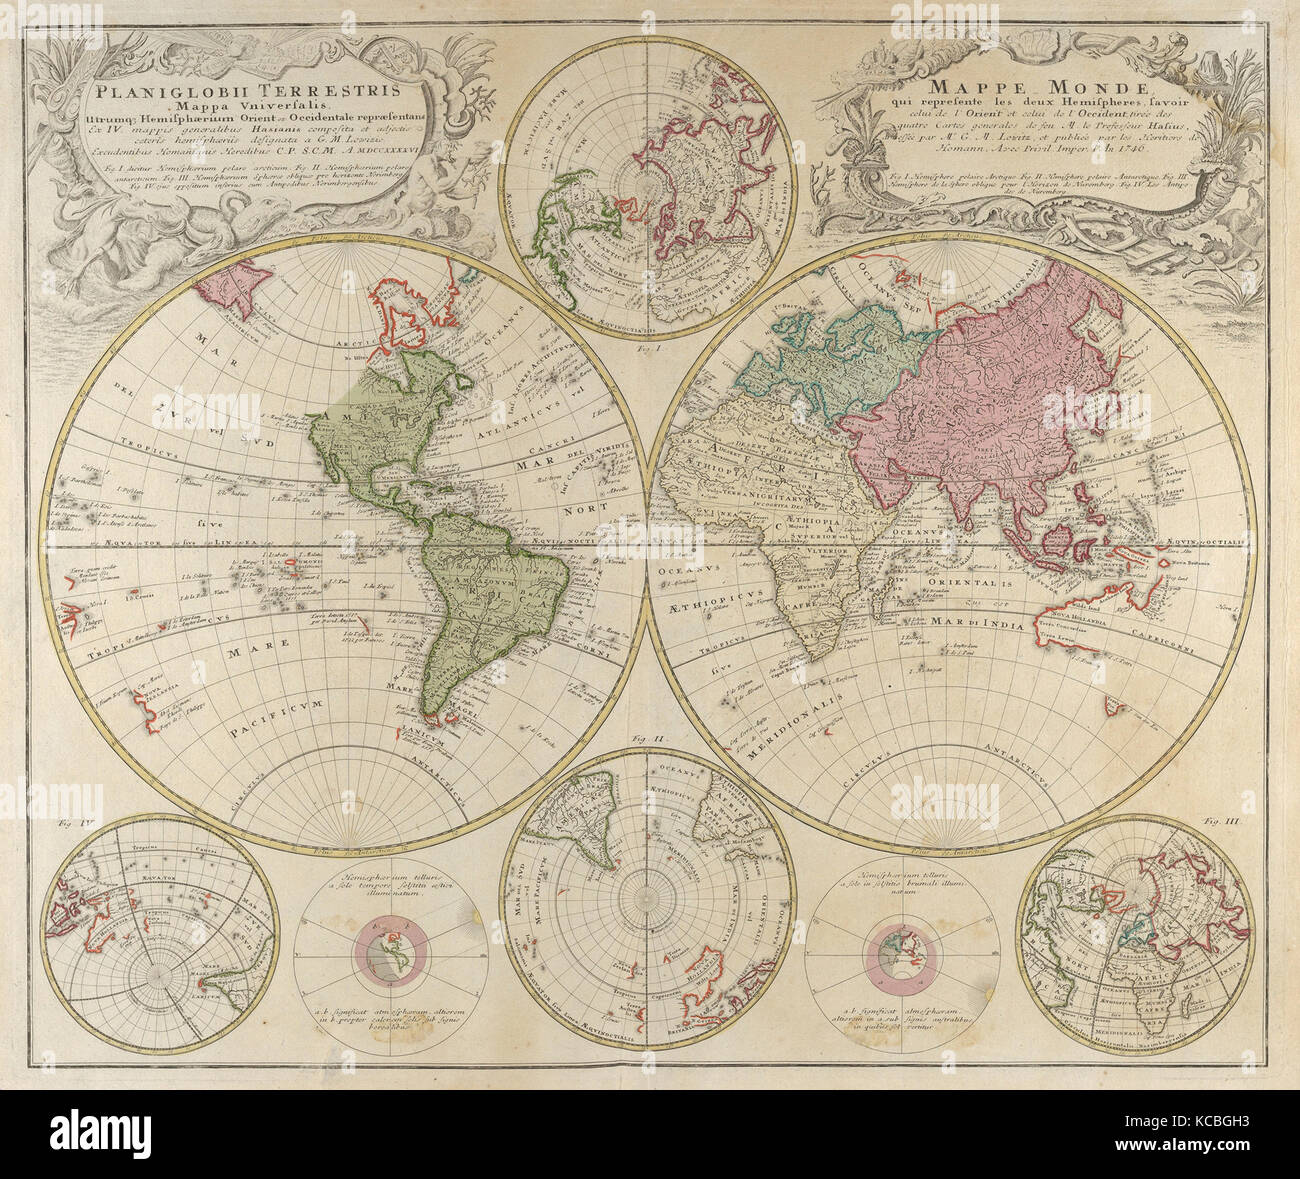 Planiglobii Terrestris Mappa Universalis..., Johann Baptist Homann, 1746 Stock Photo